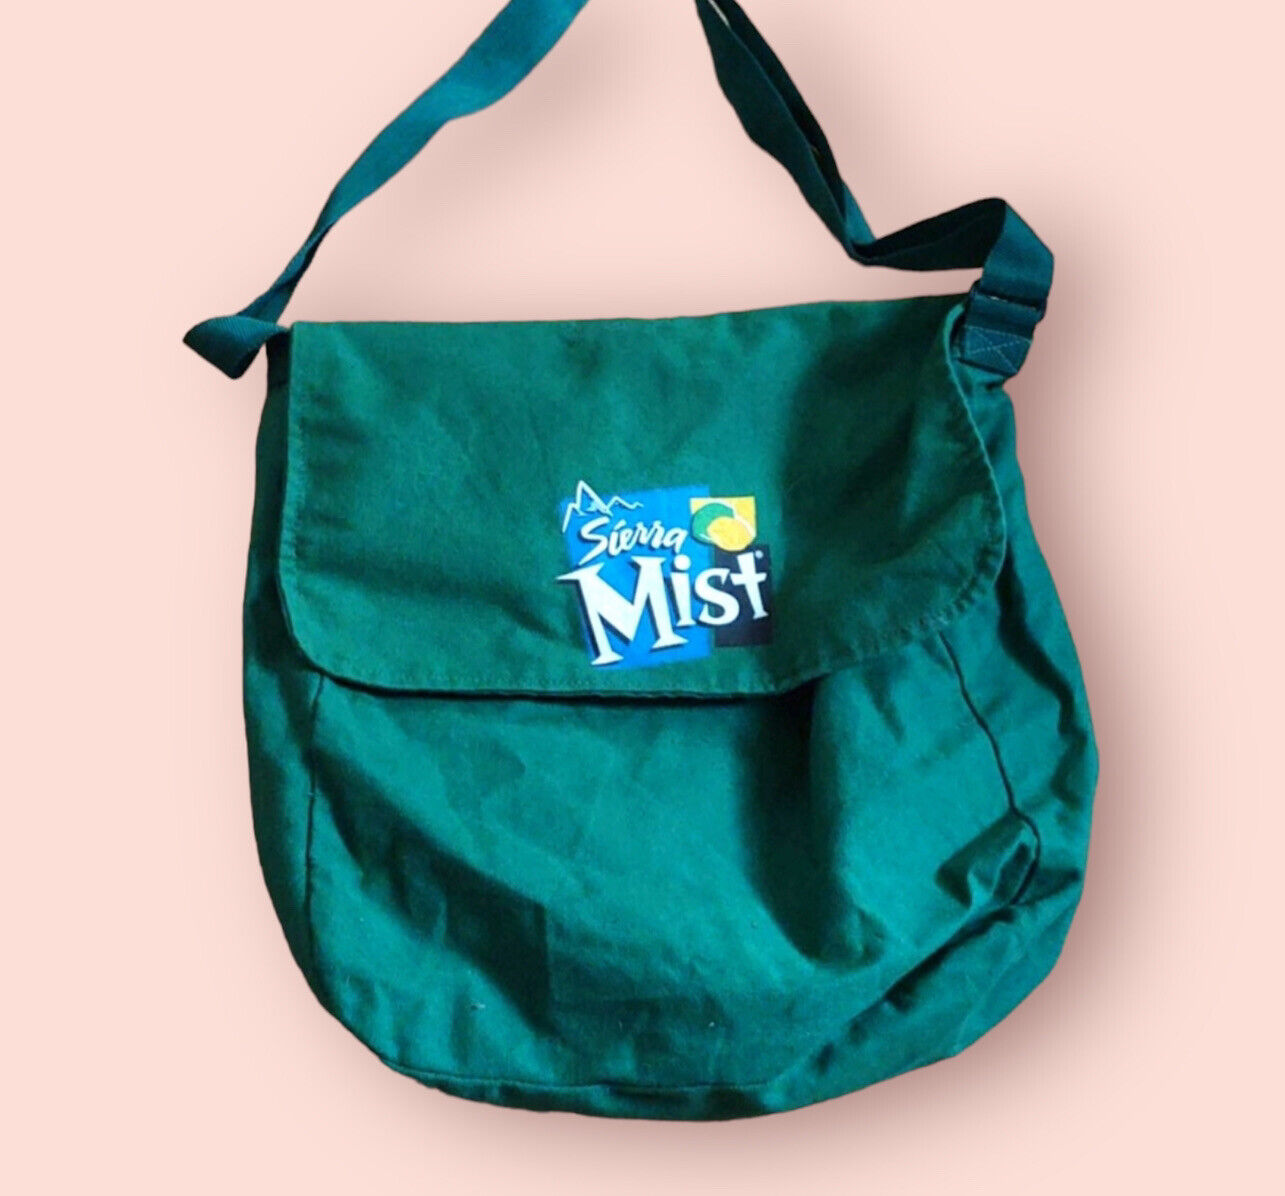 Sierra Mist Soda Logo Promotional Small Messenger Handbag Satchel Unisex RARE